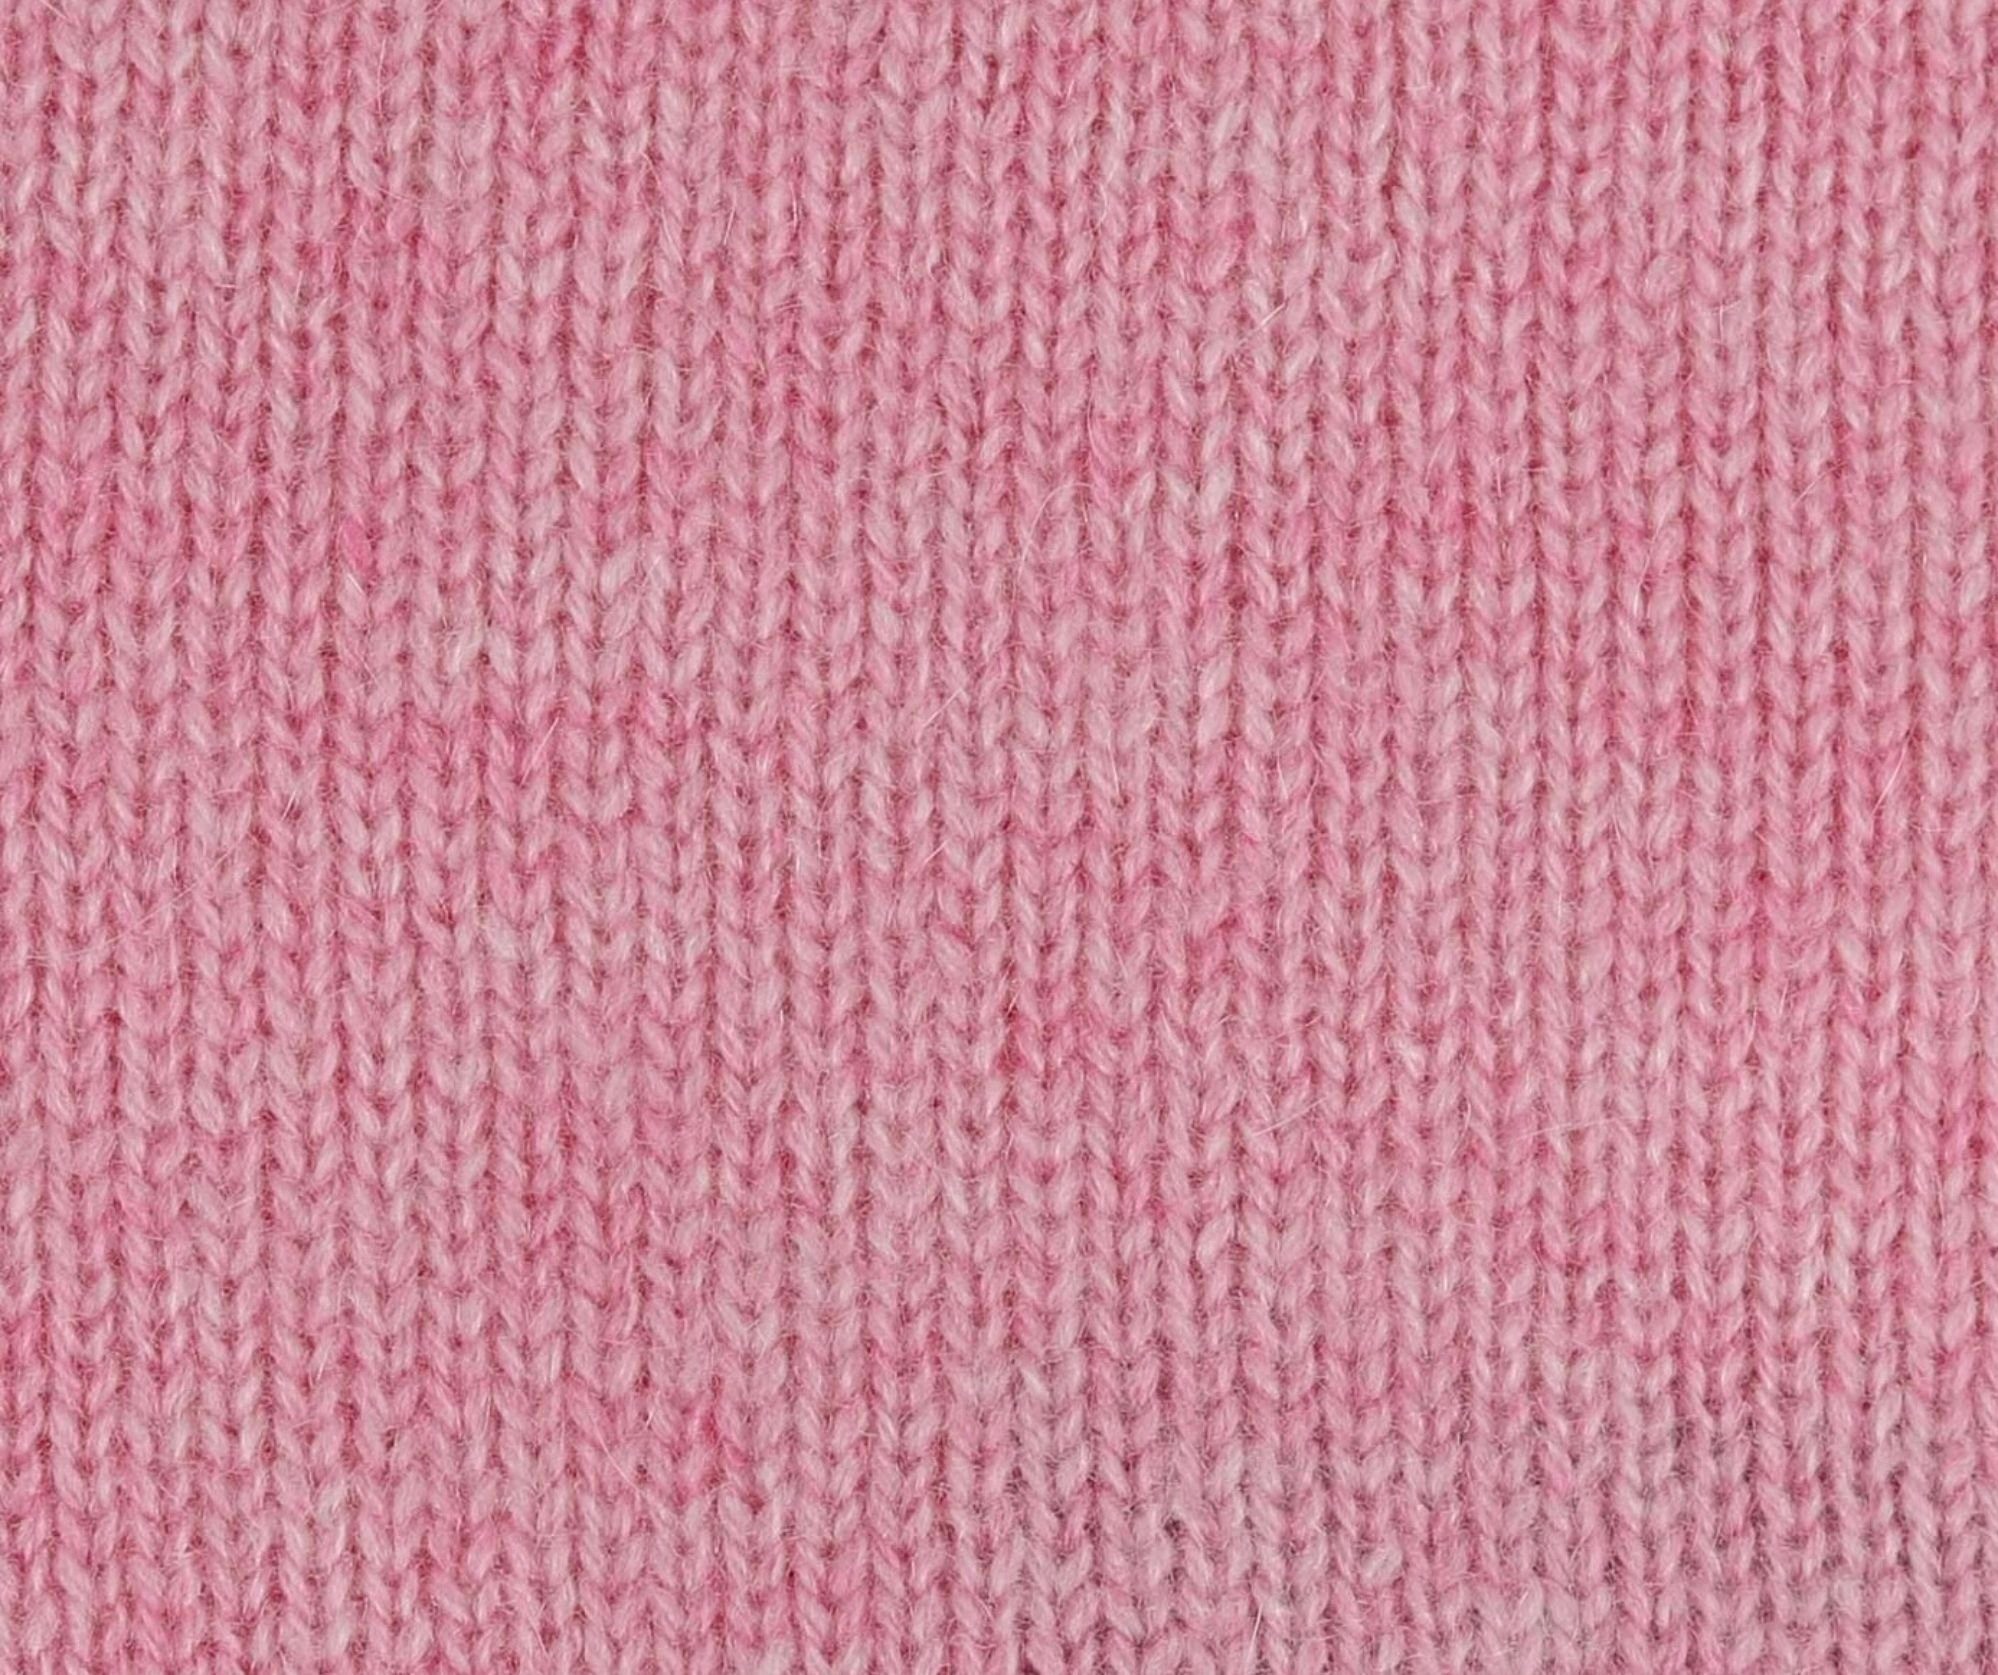 Strickmütze 100 Kaschmir Zwillingsherz Zwillingsherz pink melange Mütze Beanie % aus Unifarben